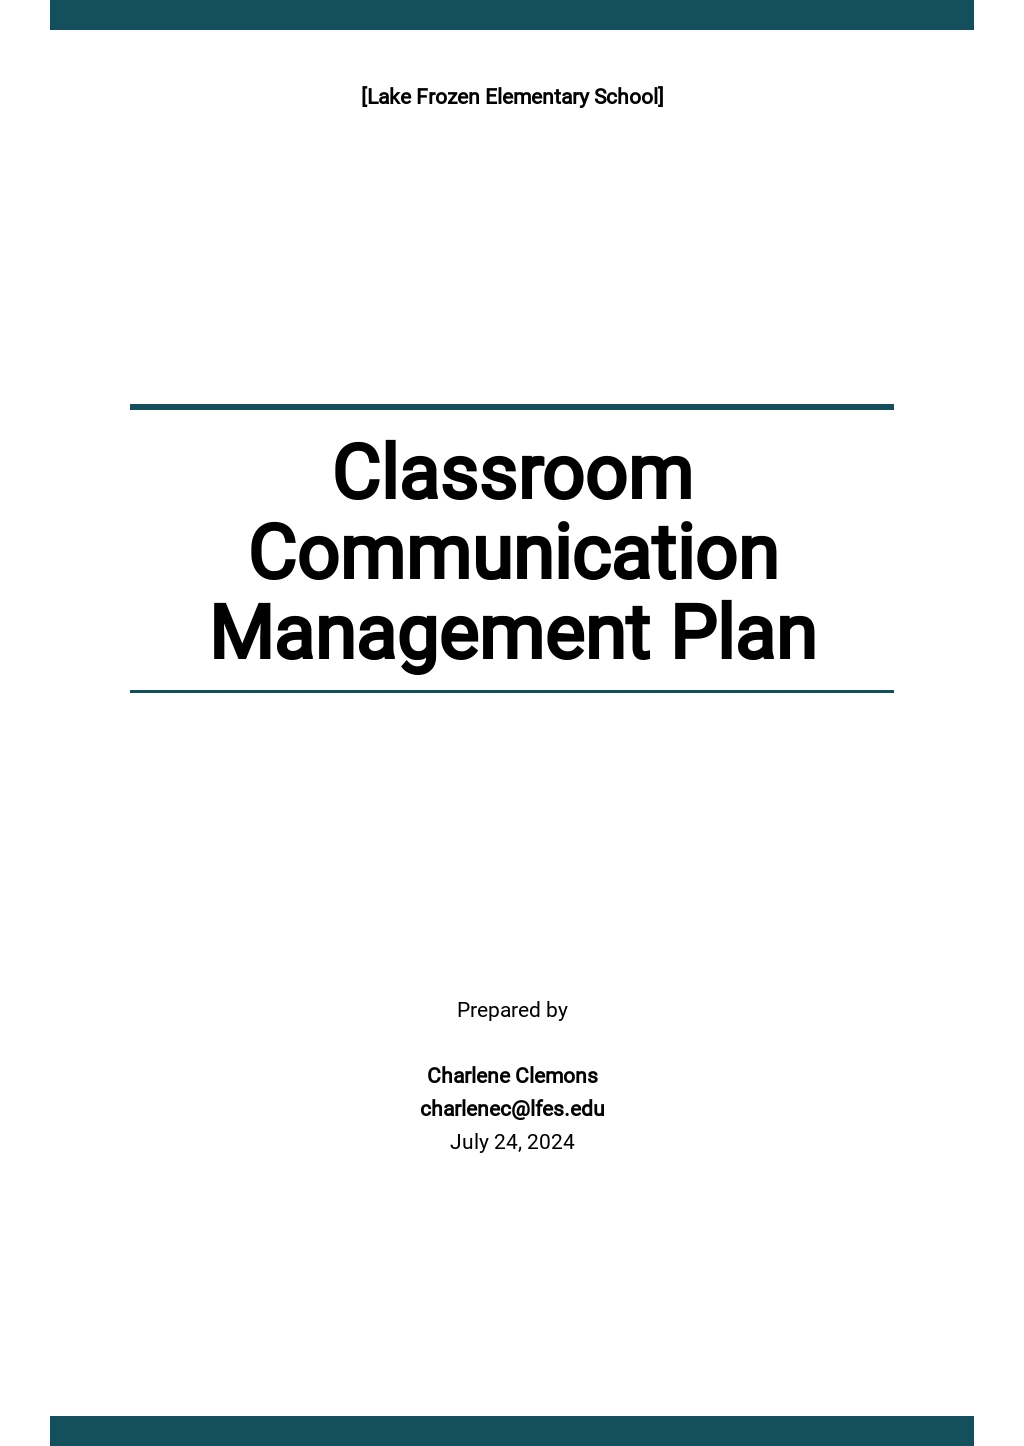 Classroom Communication Management Plan Template